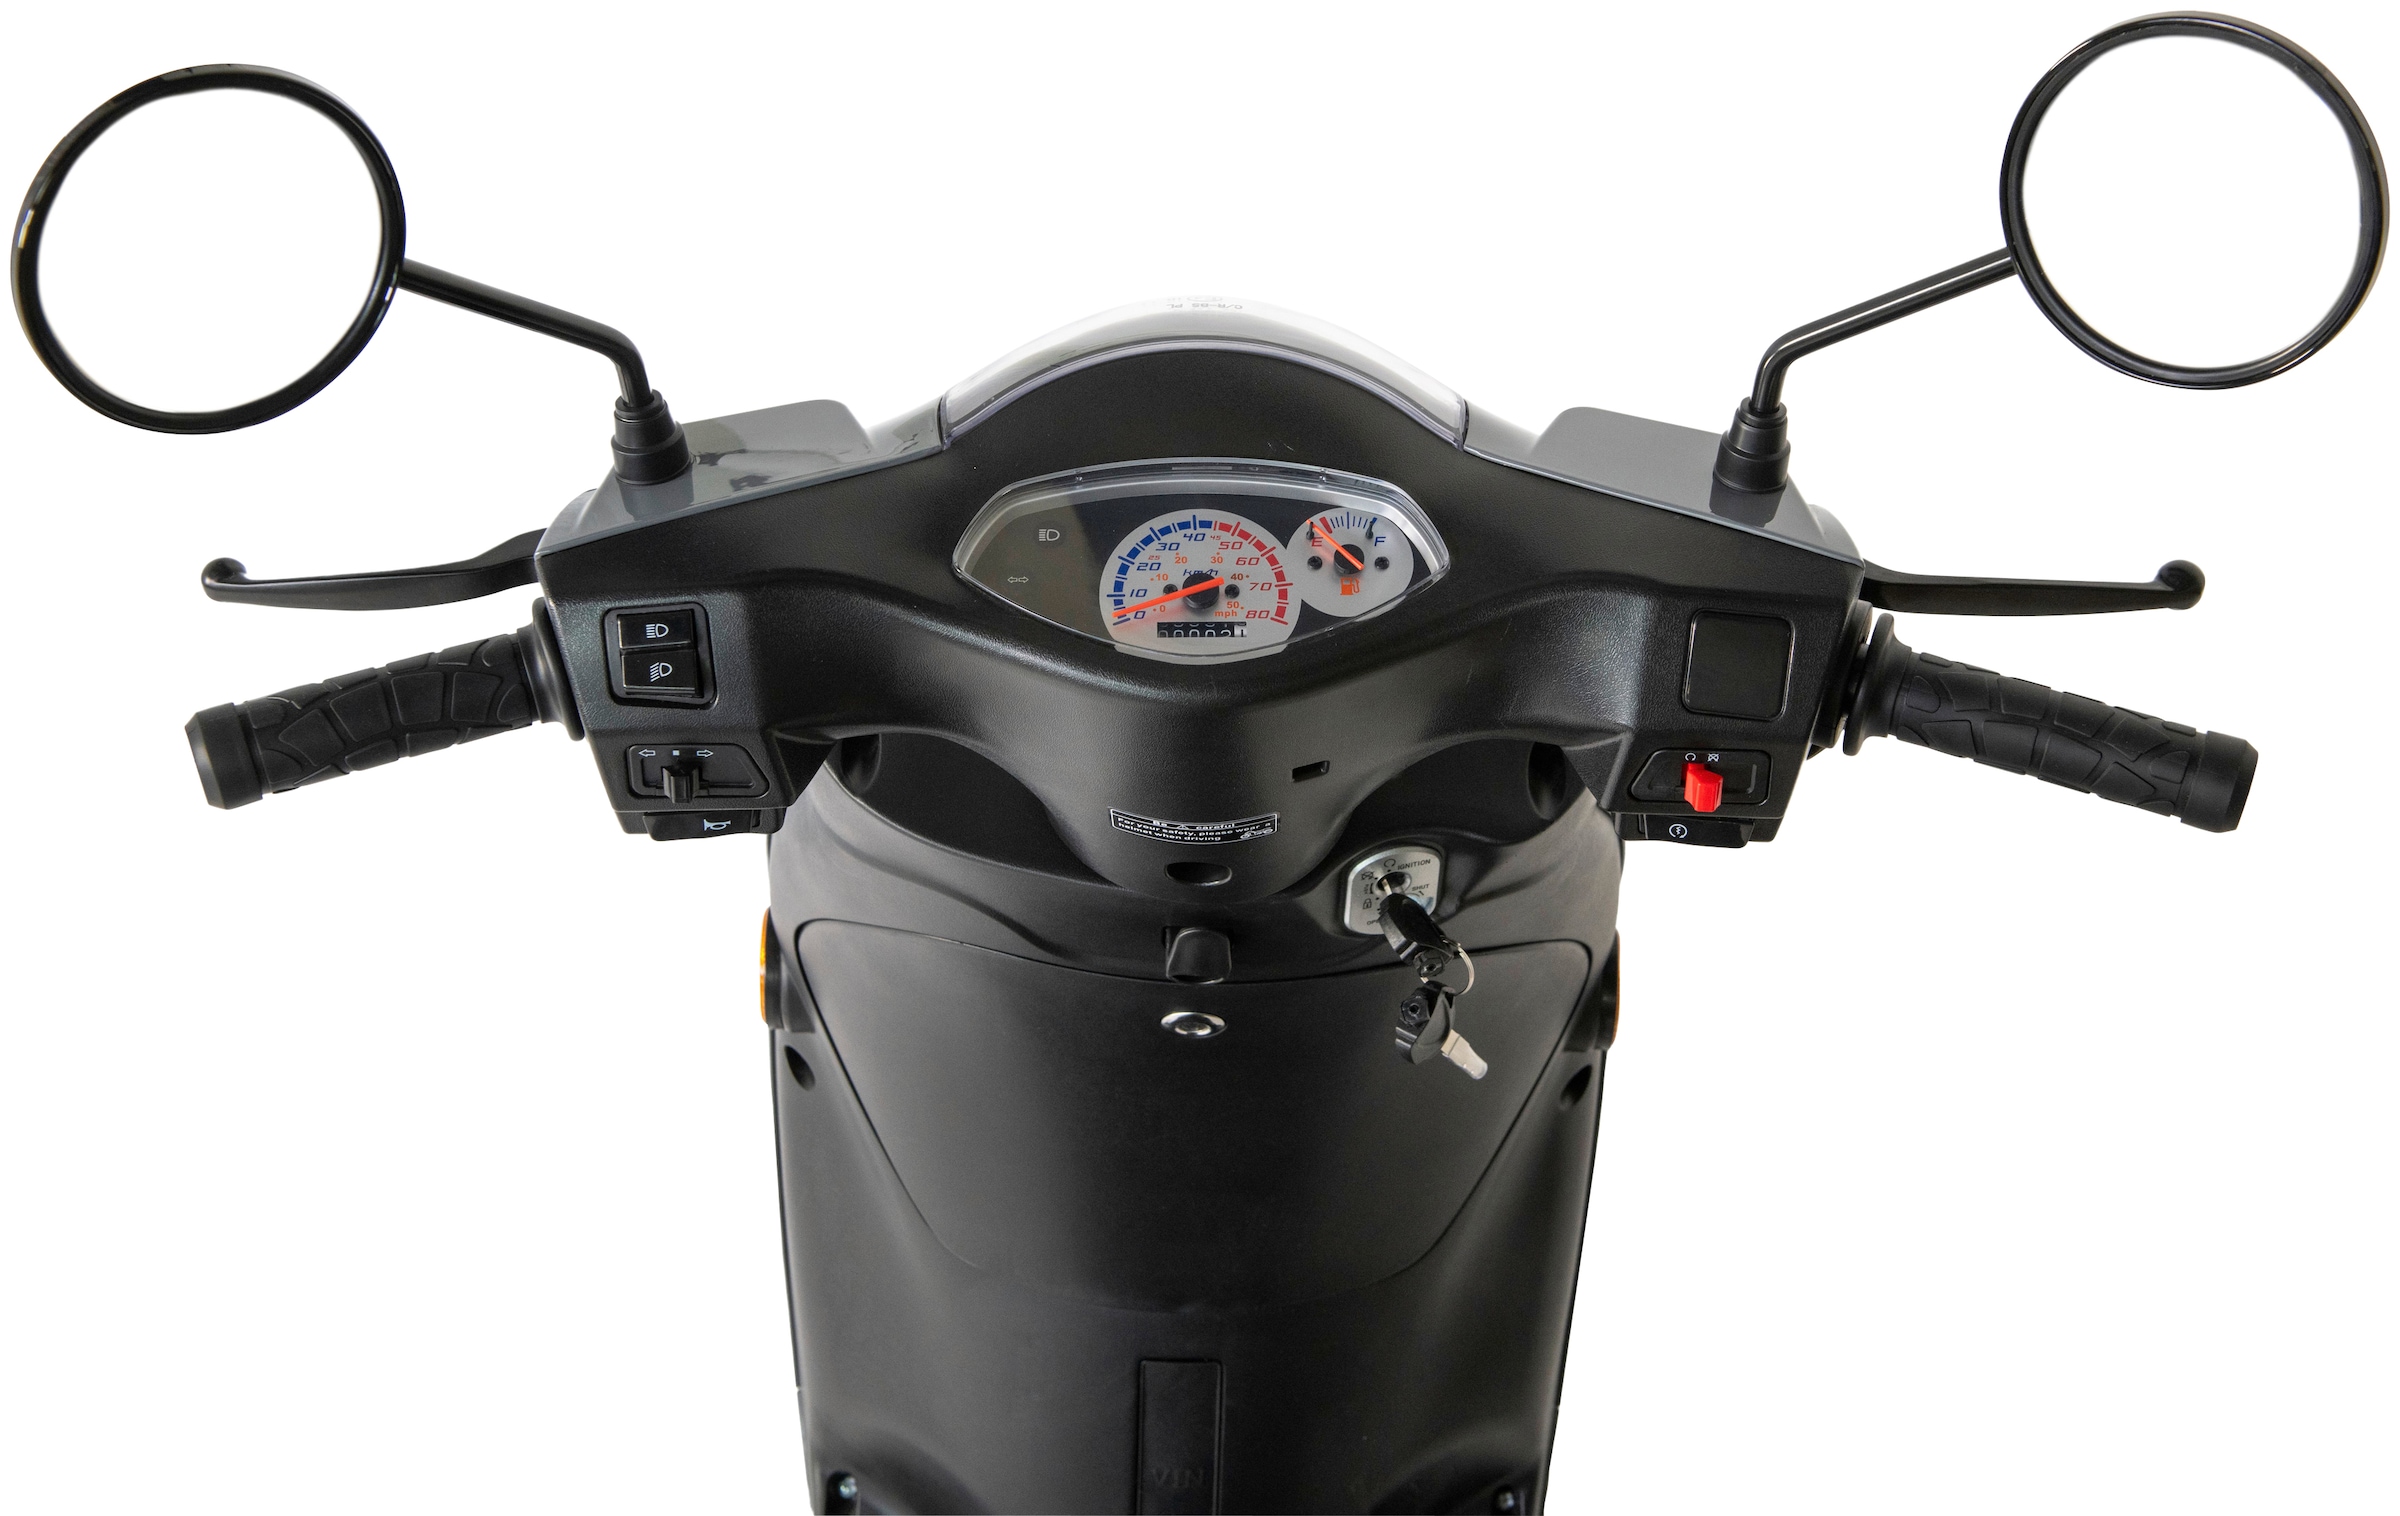 GT UNION km/h, 3 mit 2 tlg., PS, kaufen 50 »Matteo Motorroller (Komplett-Set, Euro 50-45«, Topcase inkl. 5, online Topcase), cm³, 45